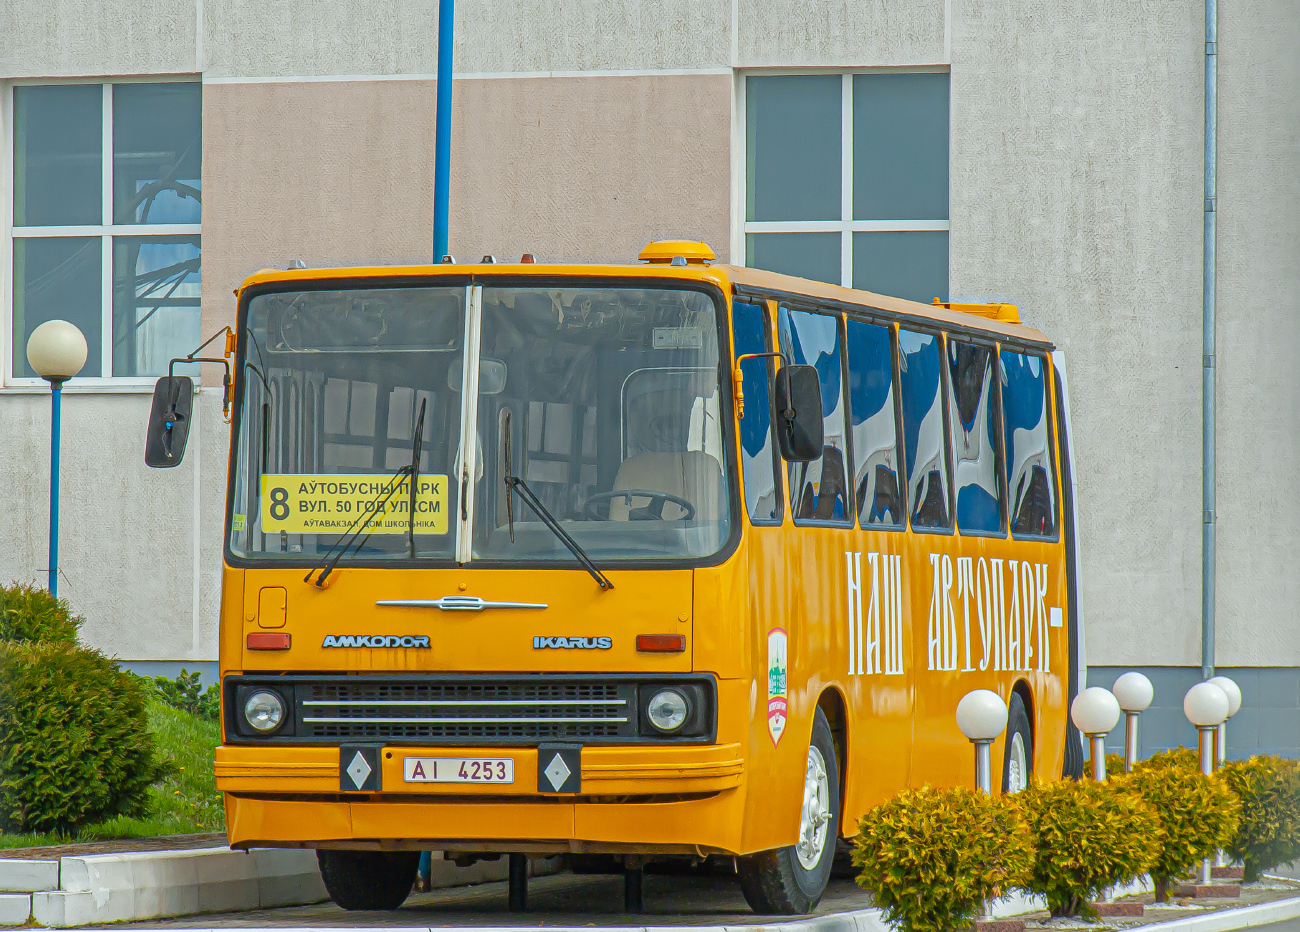 Baranovichi, Amkodor-10126 (Ikarus 280) nr. 11490; Автобусы-памятники